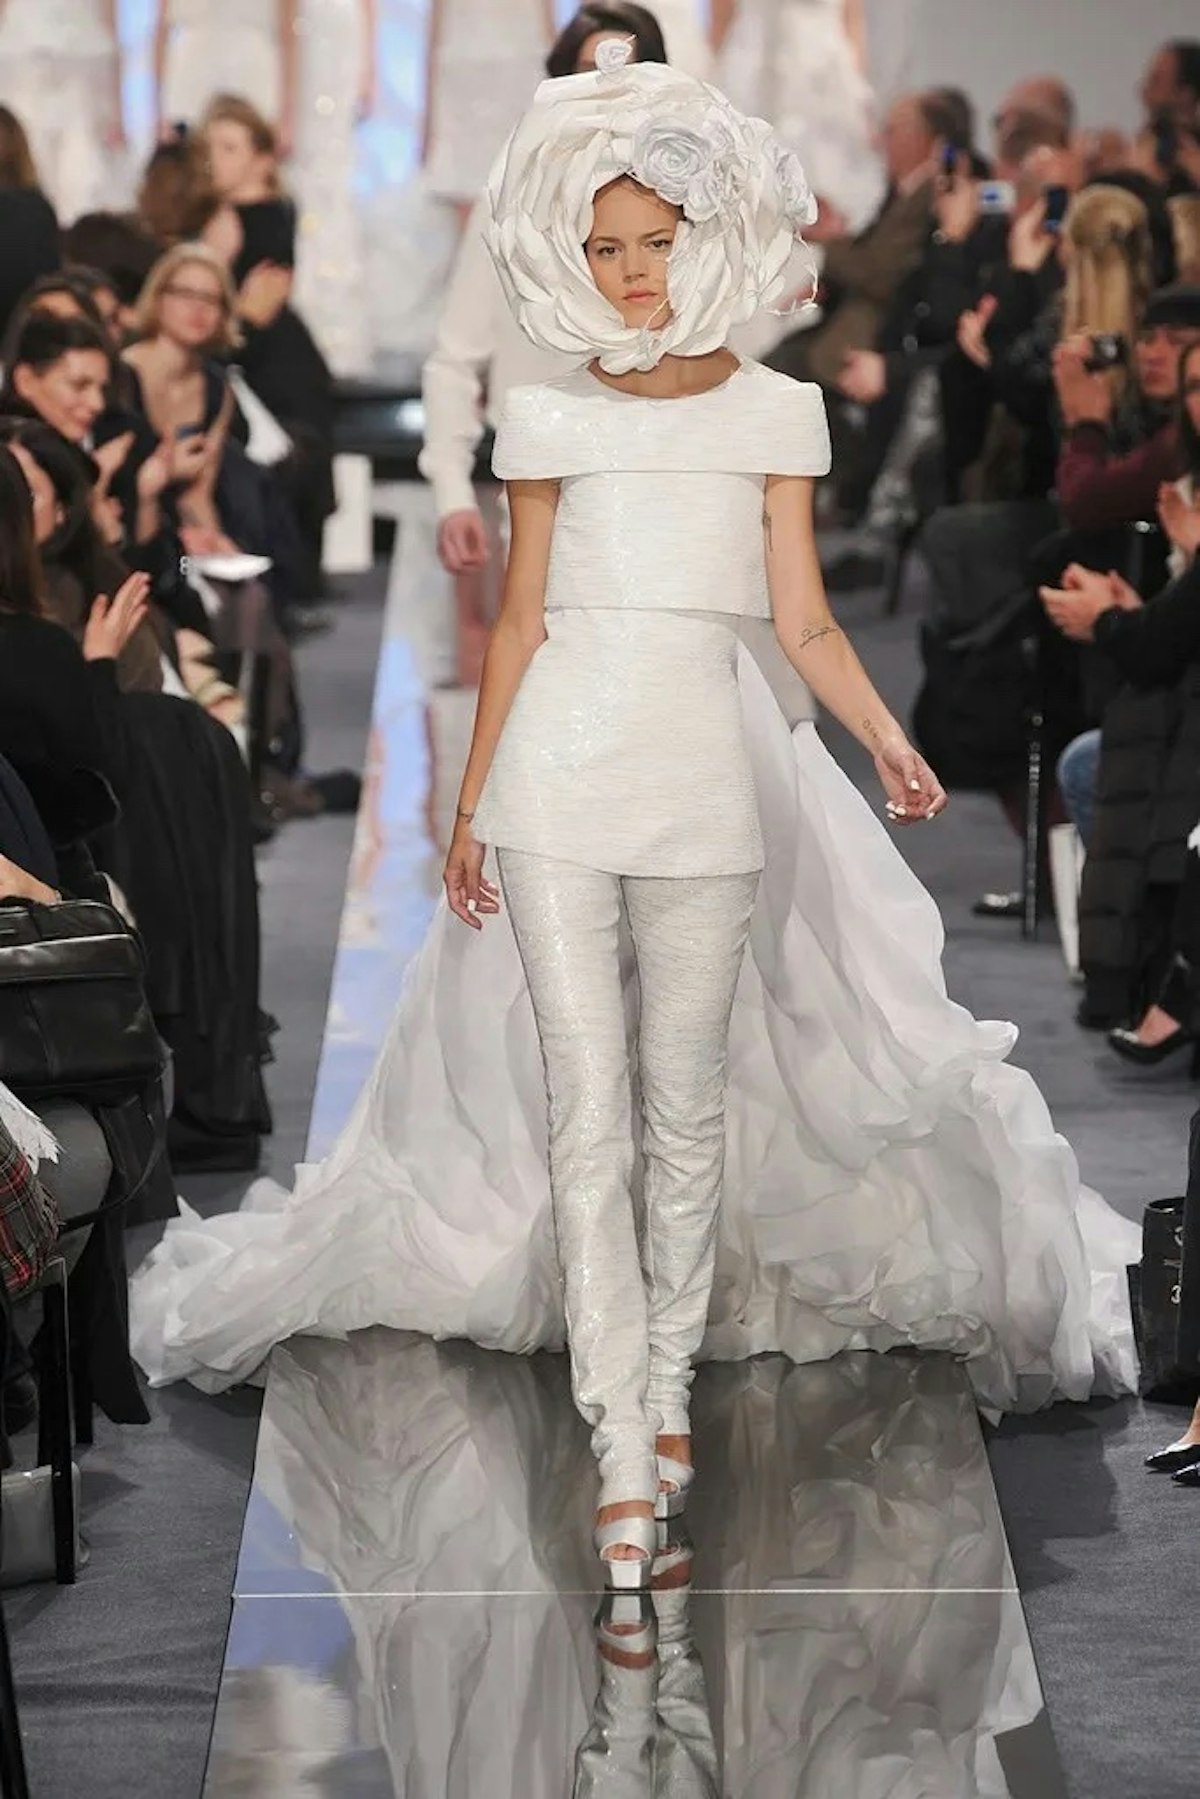 New York Bridal Fashion Week Highlights: Pearls, Dresses and